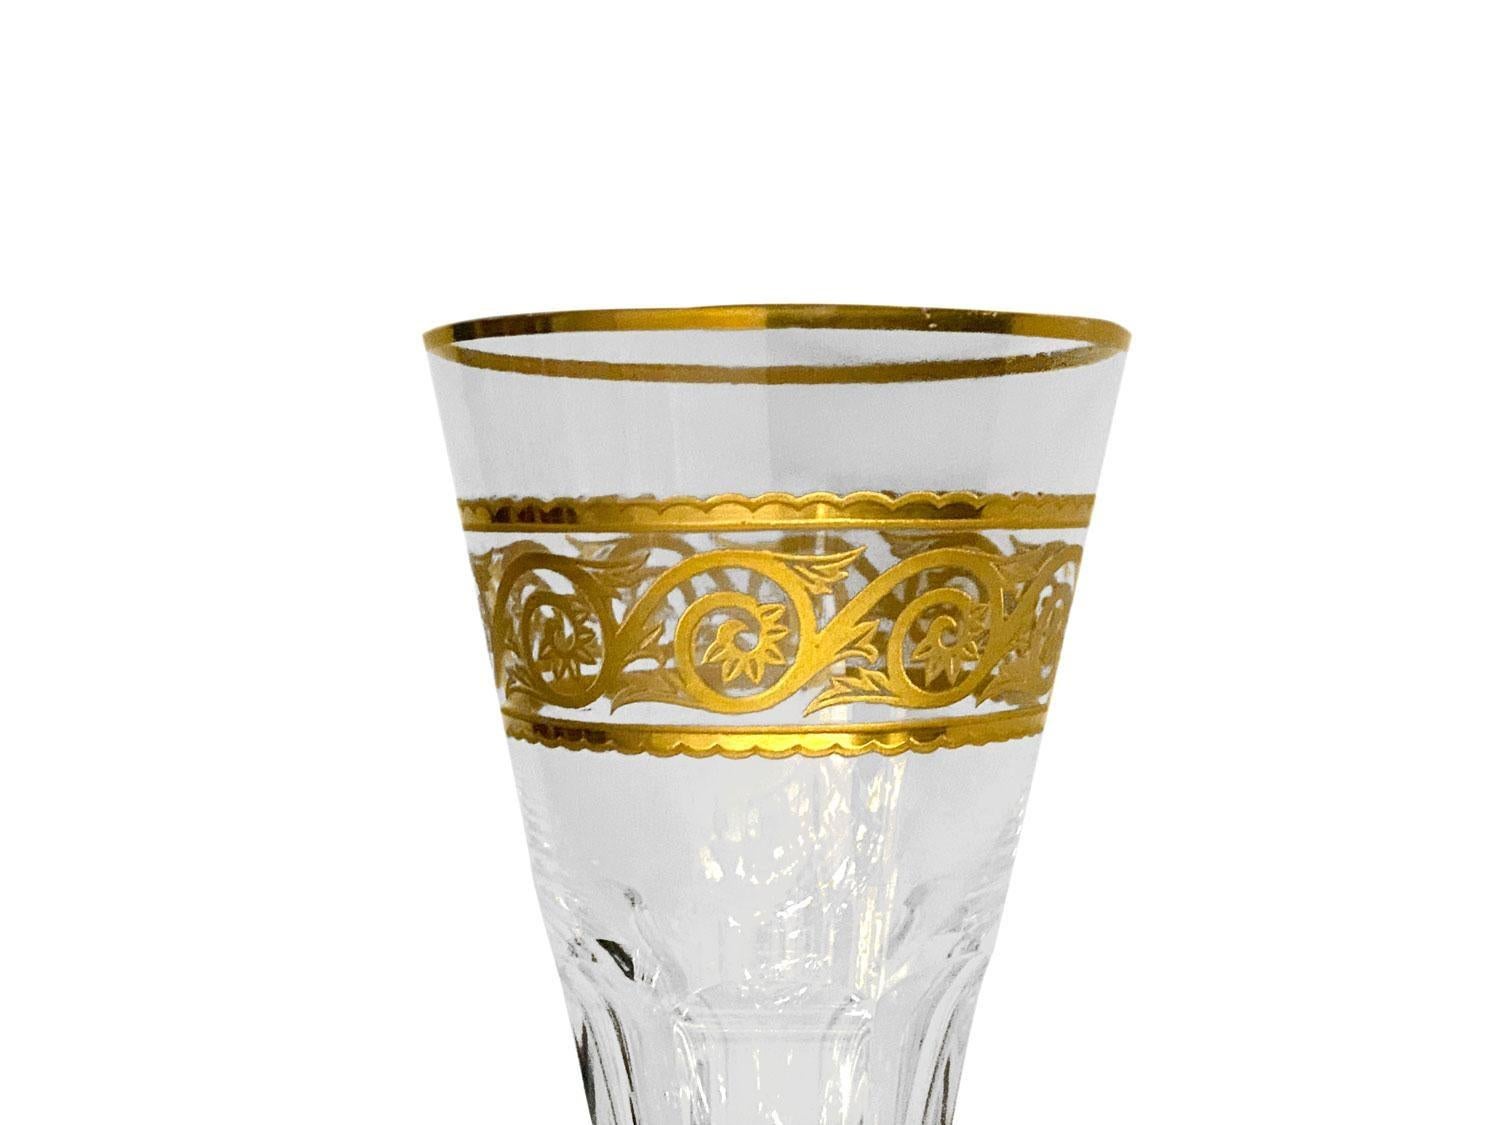 Inlay 14 Champagnes Flutes Baccarat Crystal Eldorado, 22-Carat Gold Engraved, End 19th